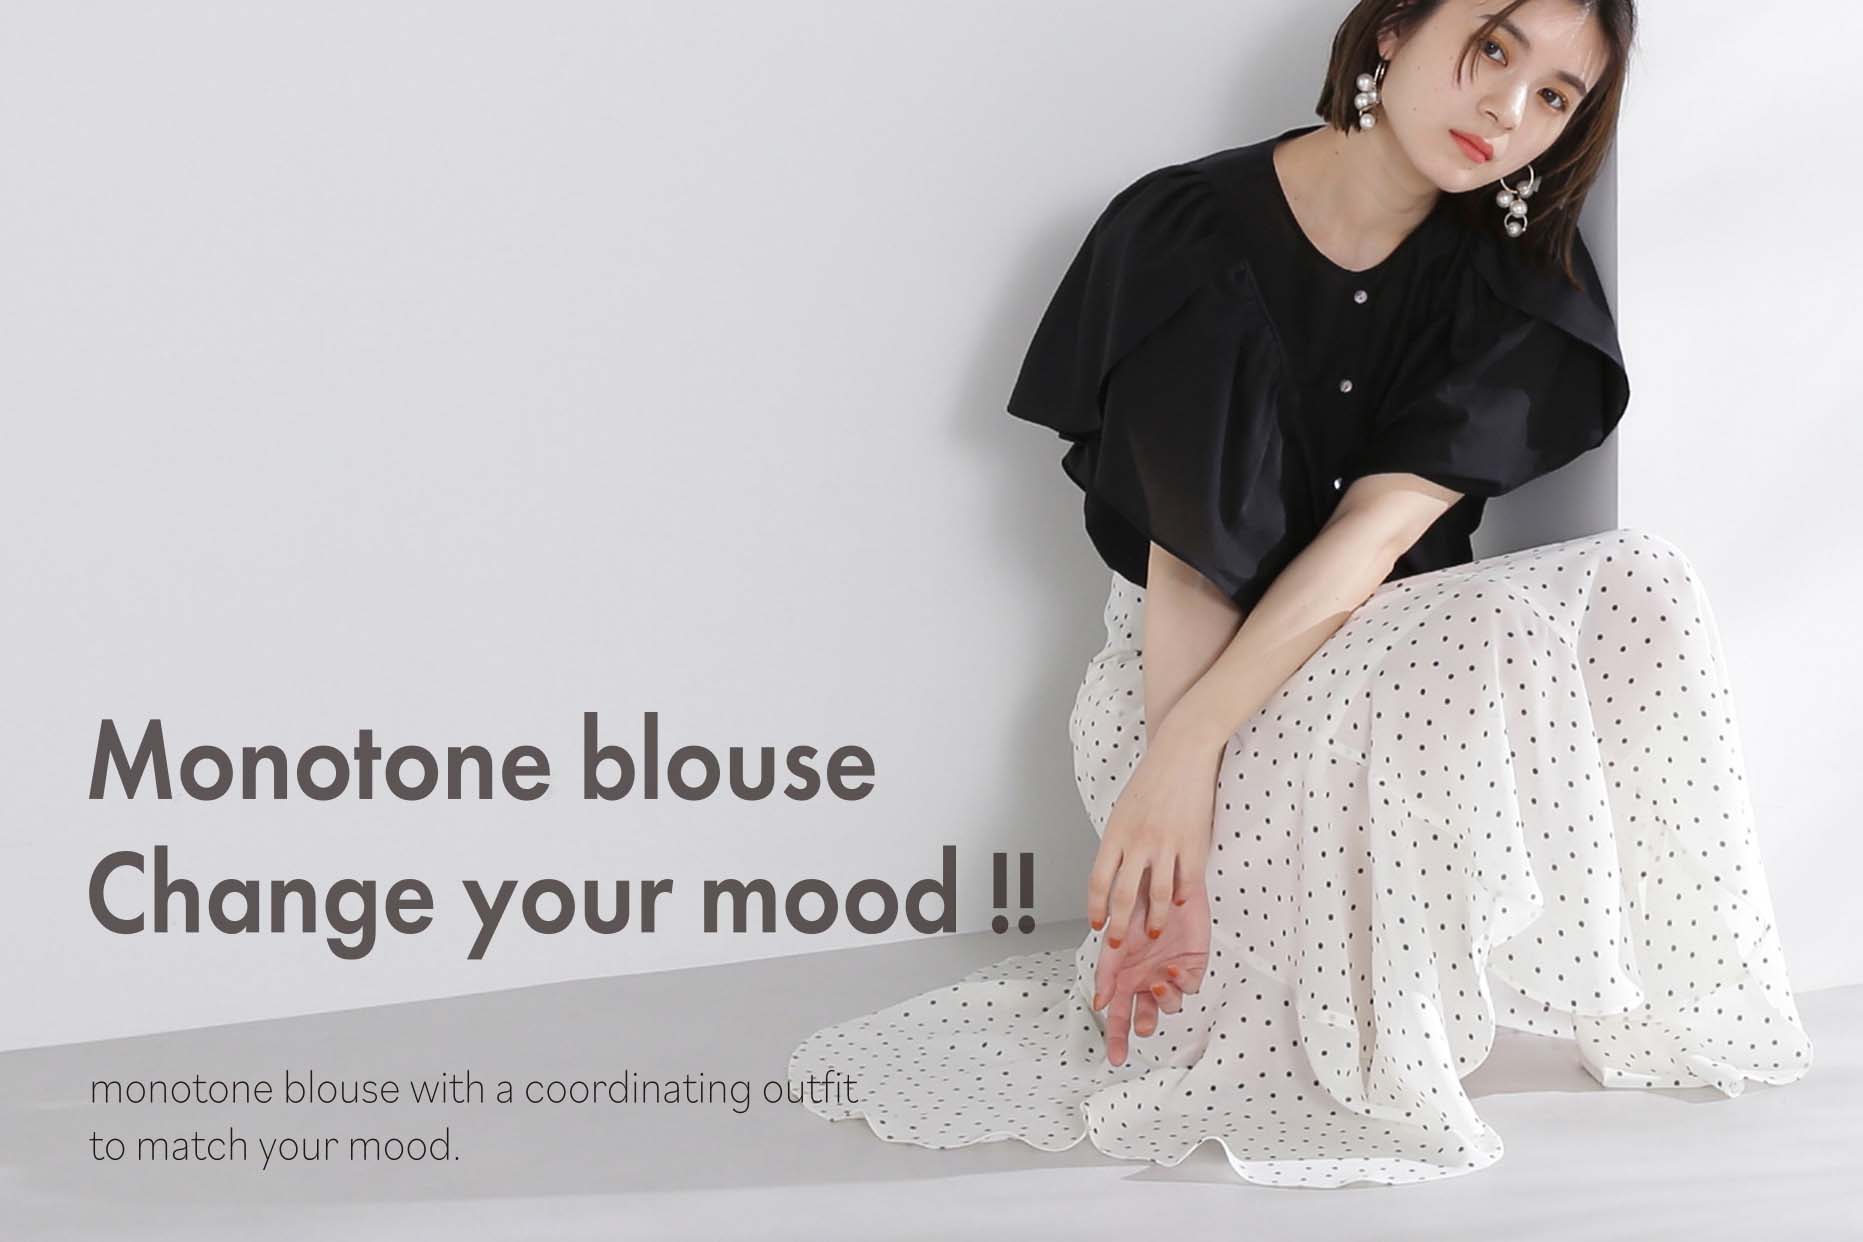 Monotone blouse Change your mood!